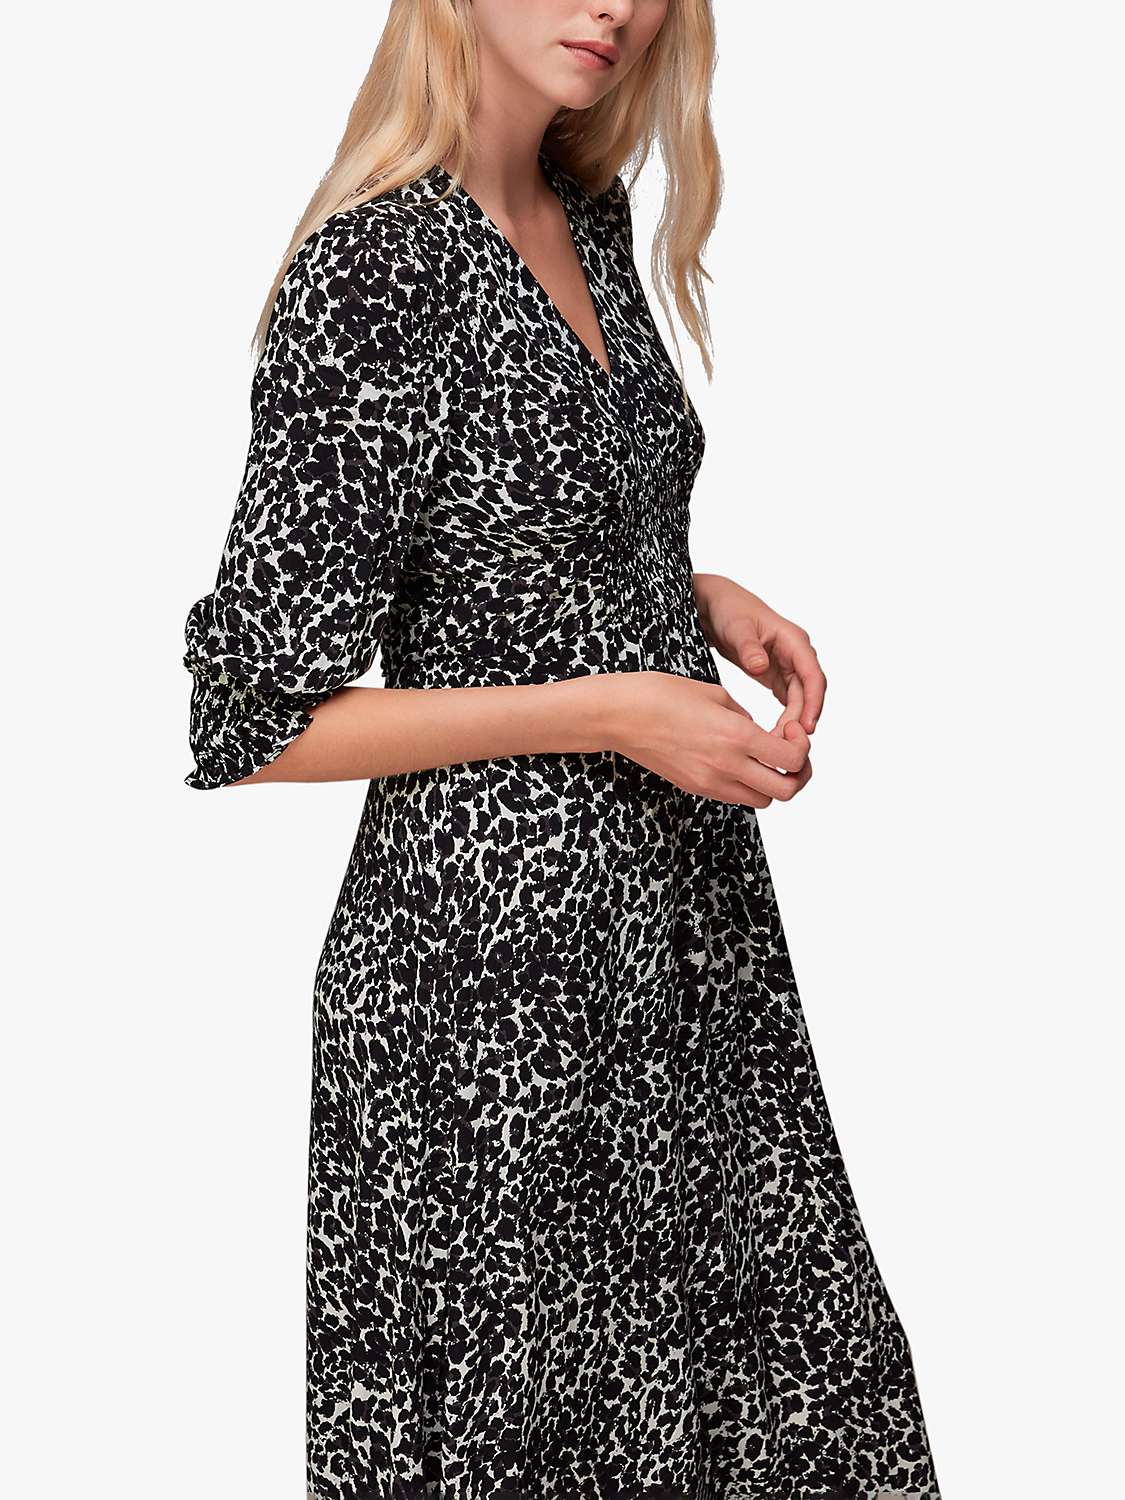 Whistles Leopard Print Shirred Dress, Black/Multi at John Lewis & Partners